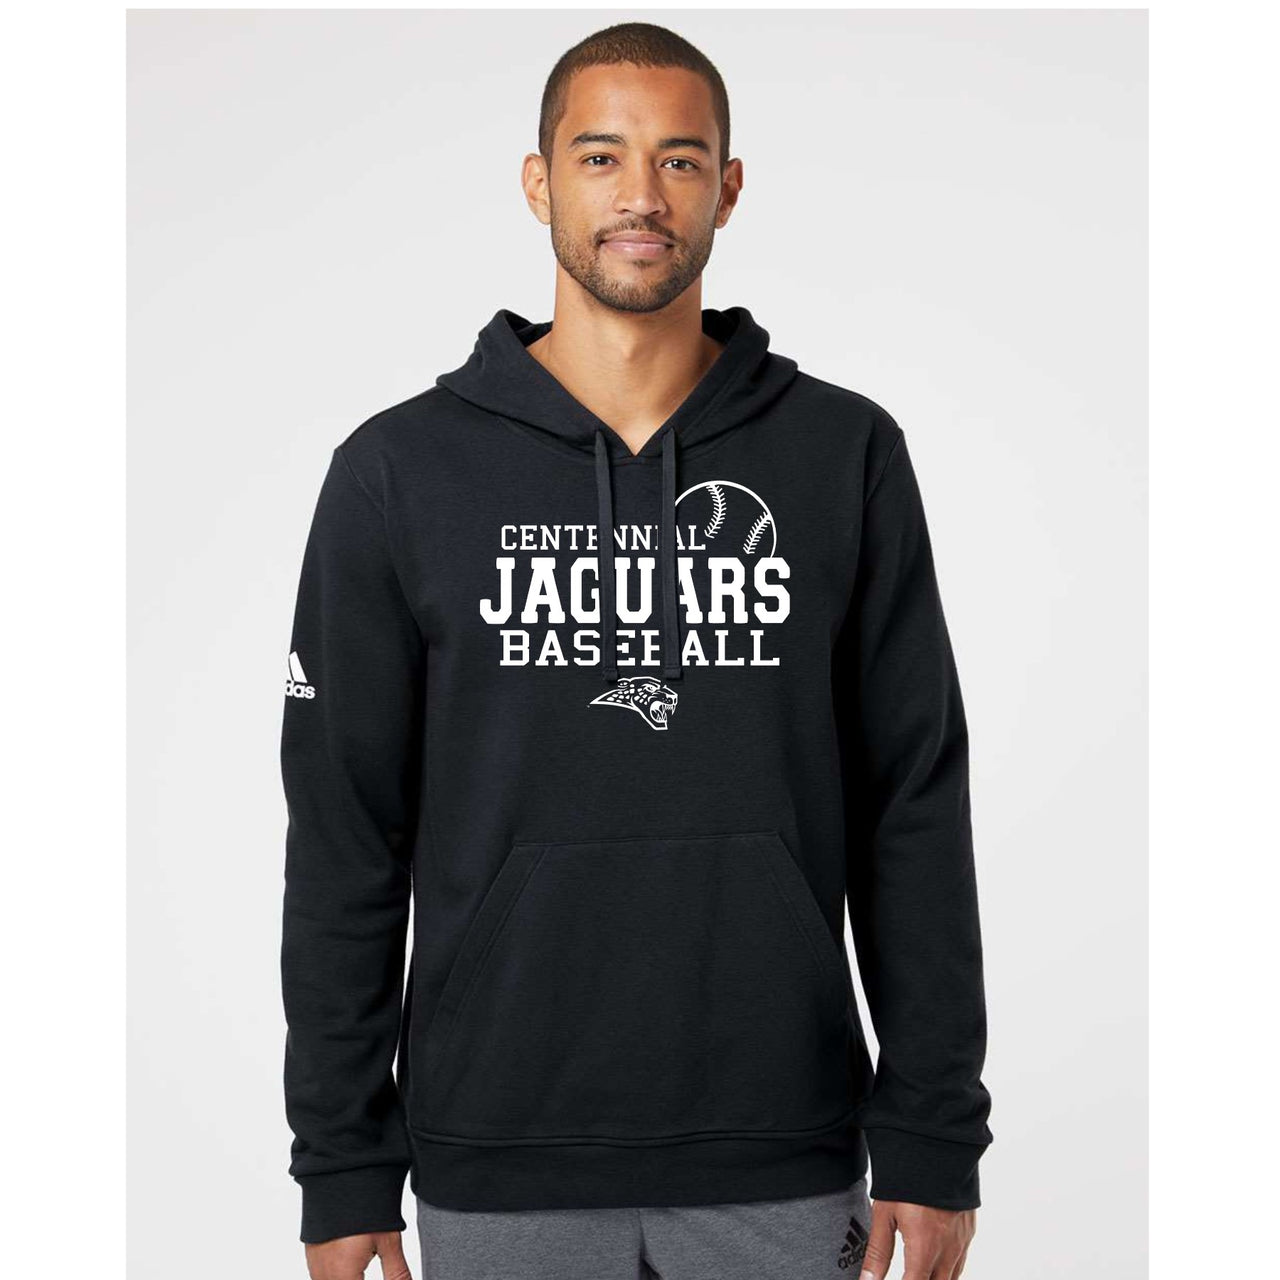 Centennial Jaguars Baseball - Adidas Unisex Fleece Hooded Sweatshirt